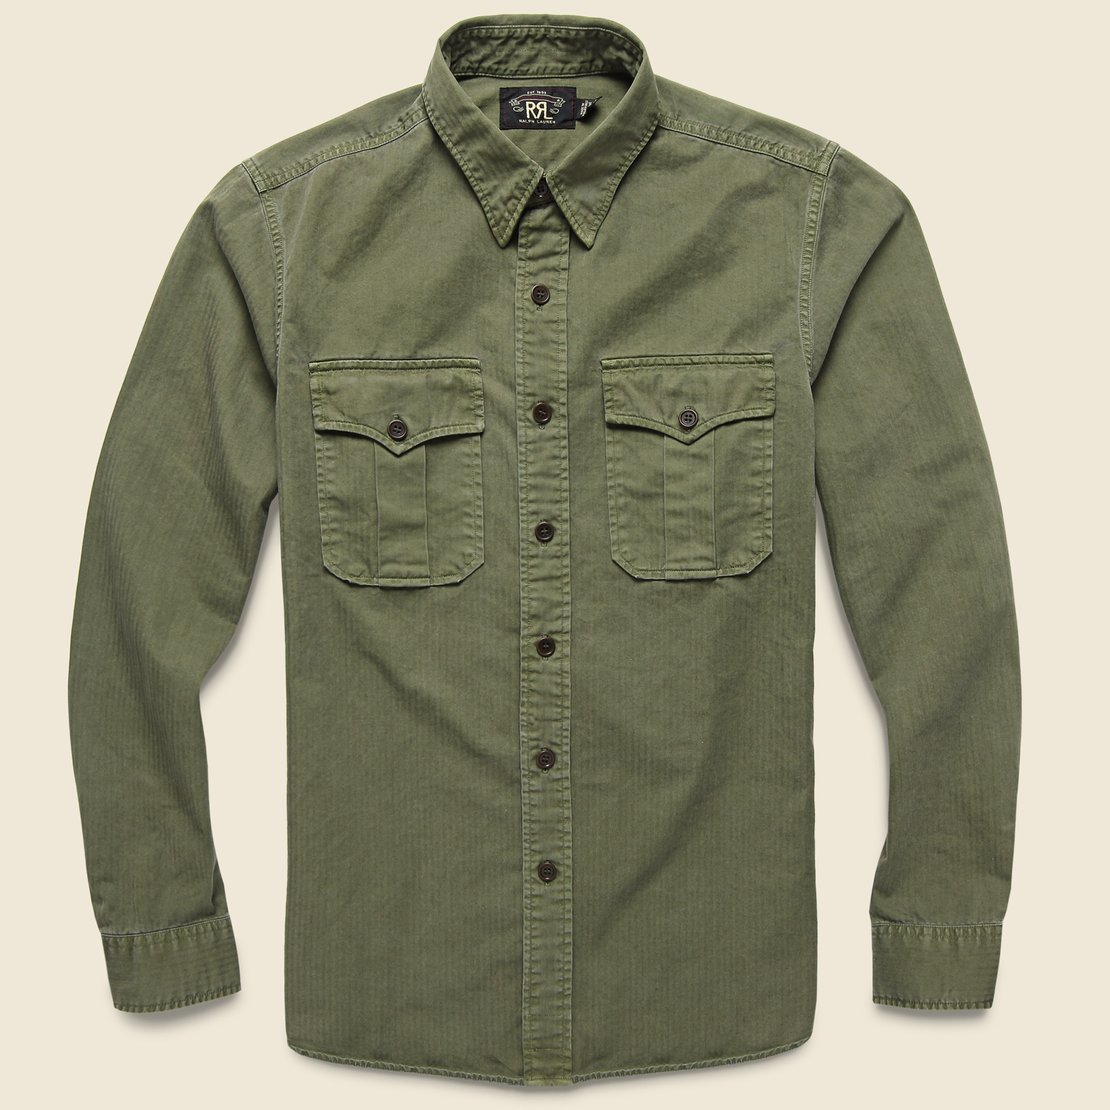 RRL G.I. Military Shirt - Olive Drab